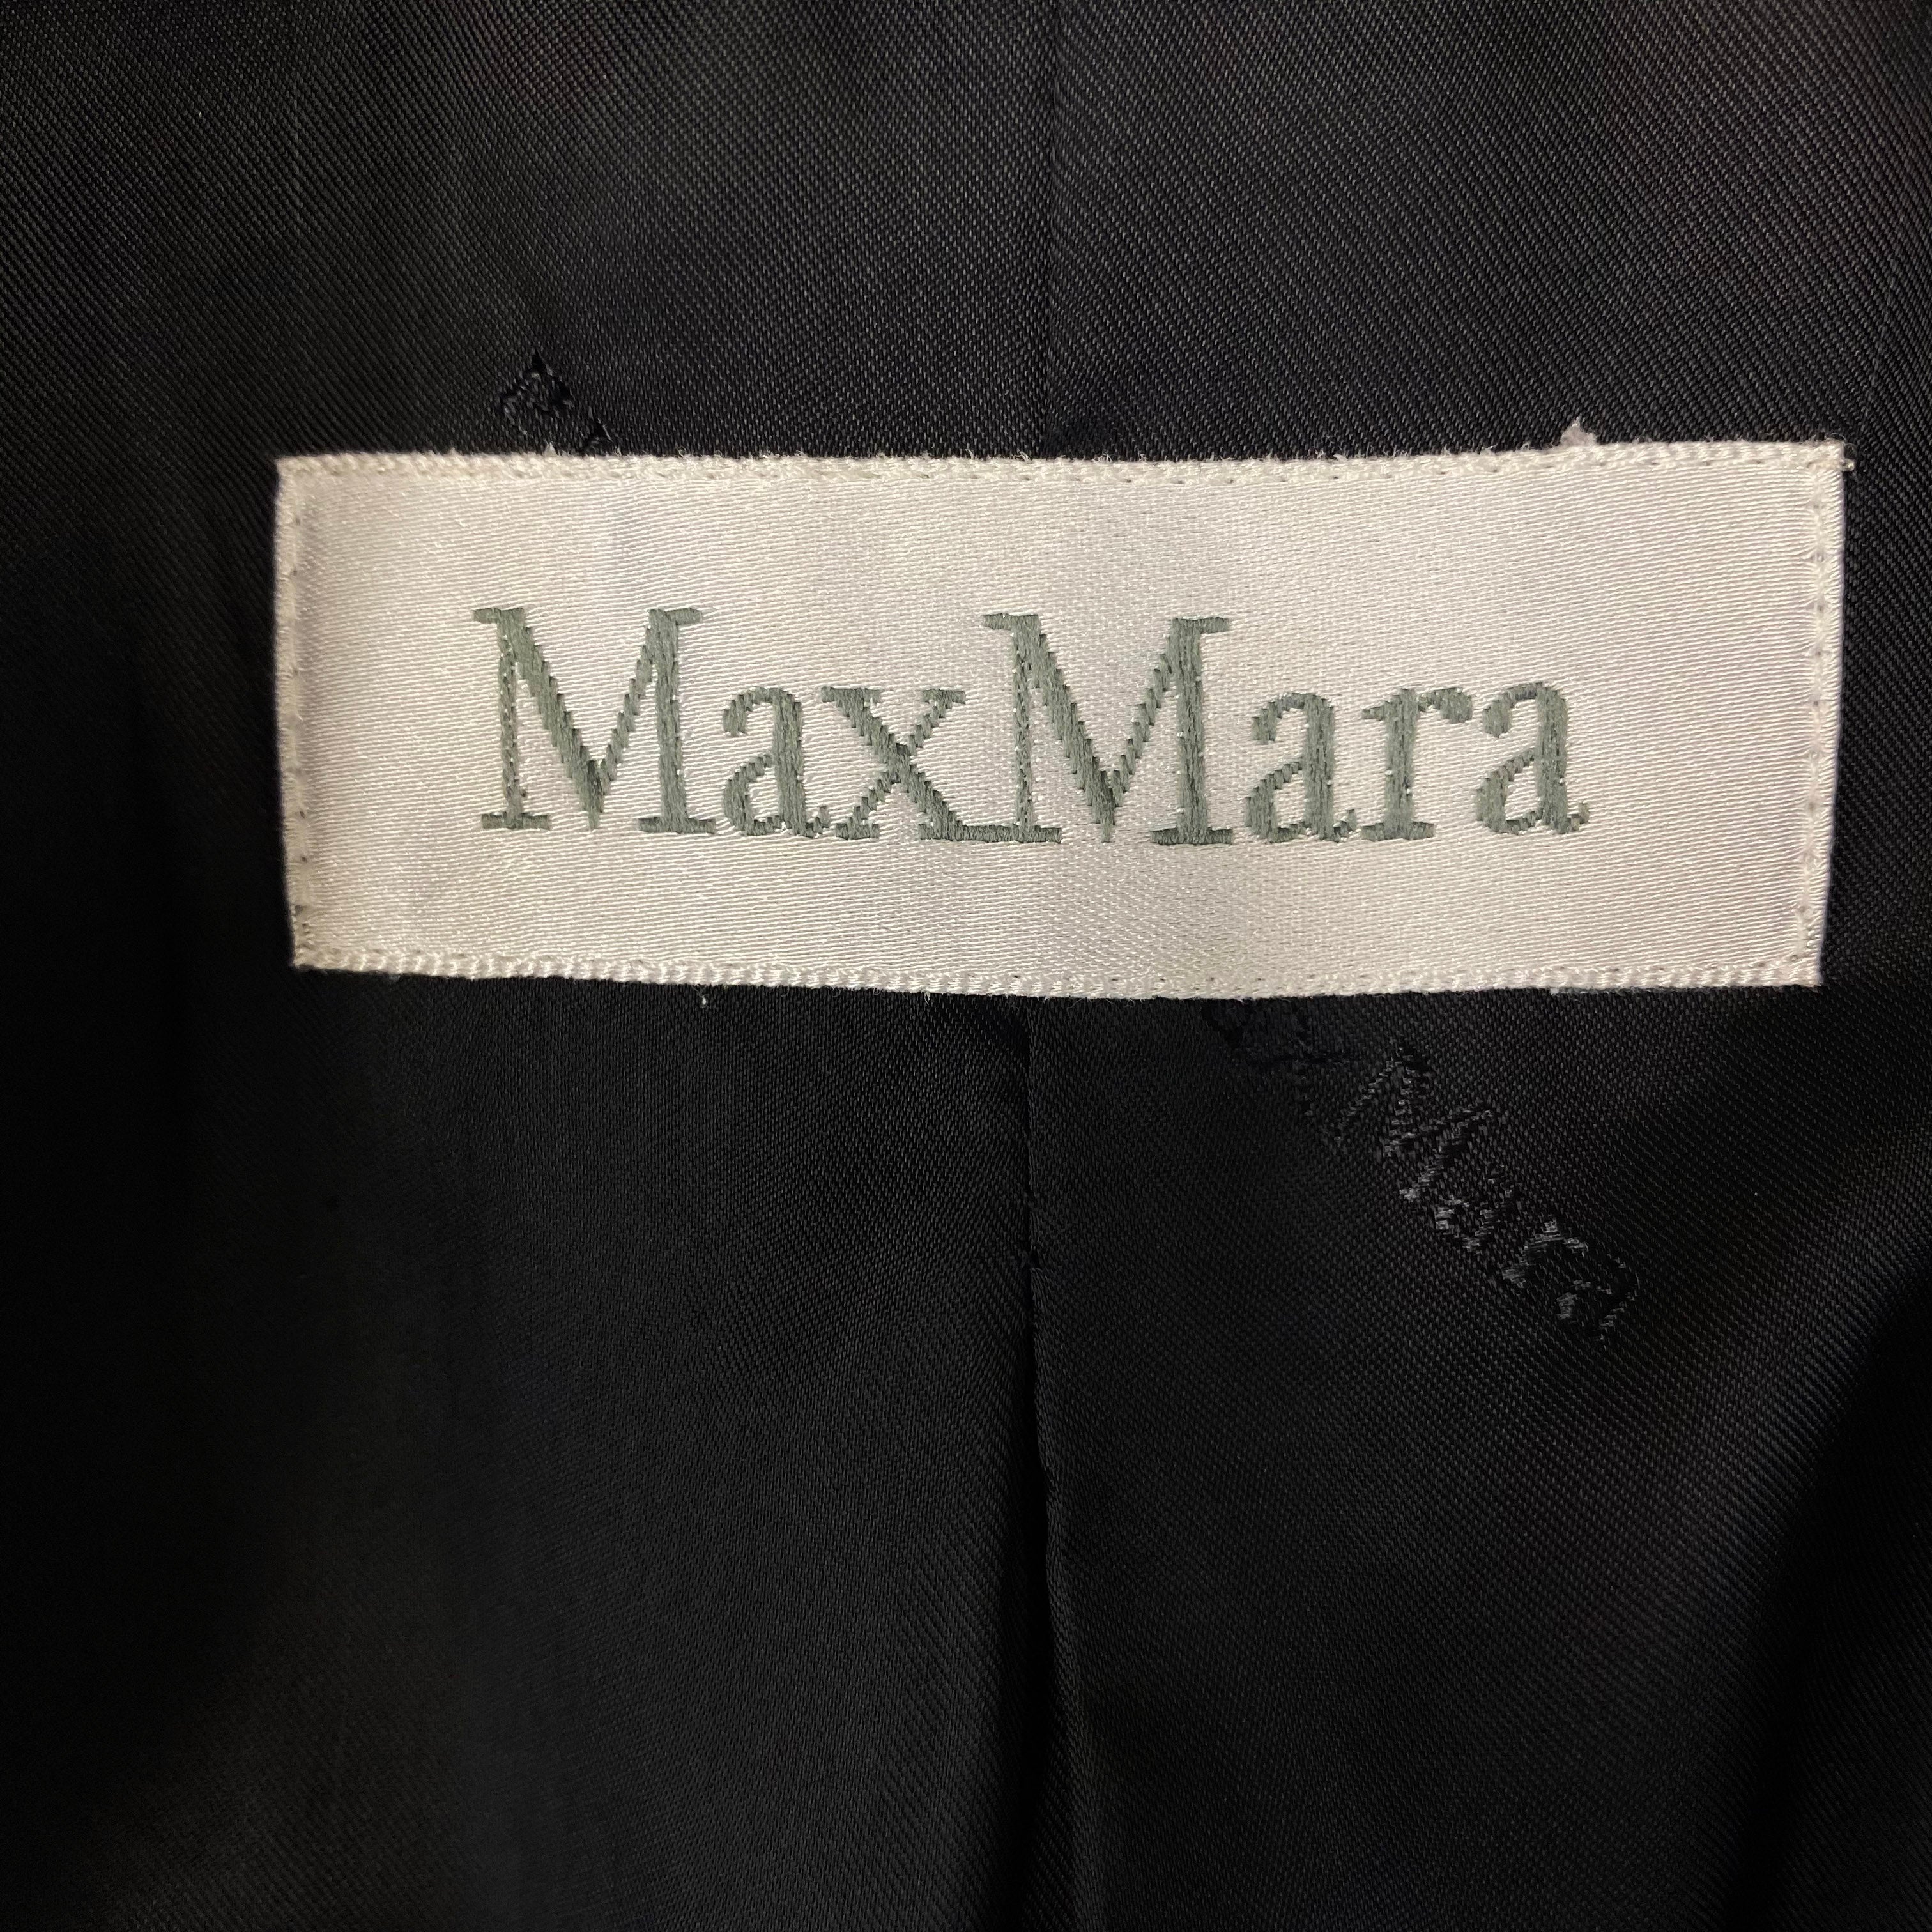 Max Mara Deep Blue Blazer